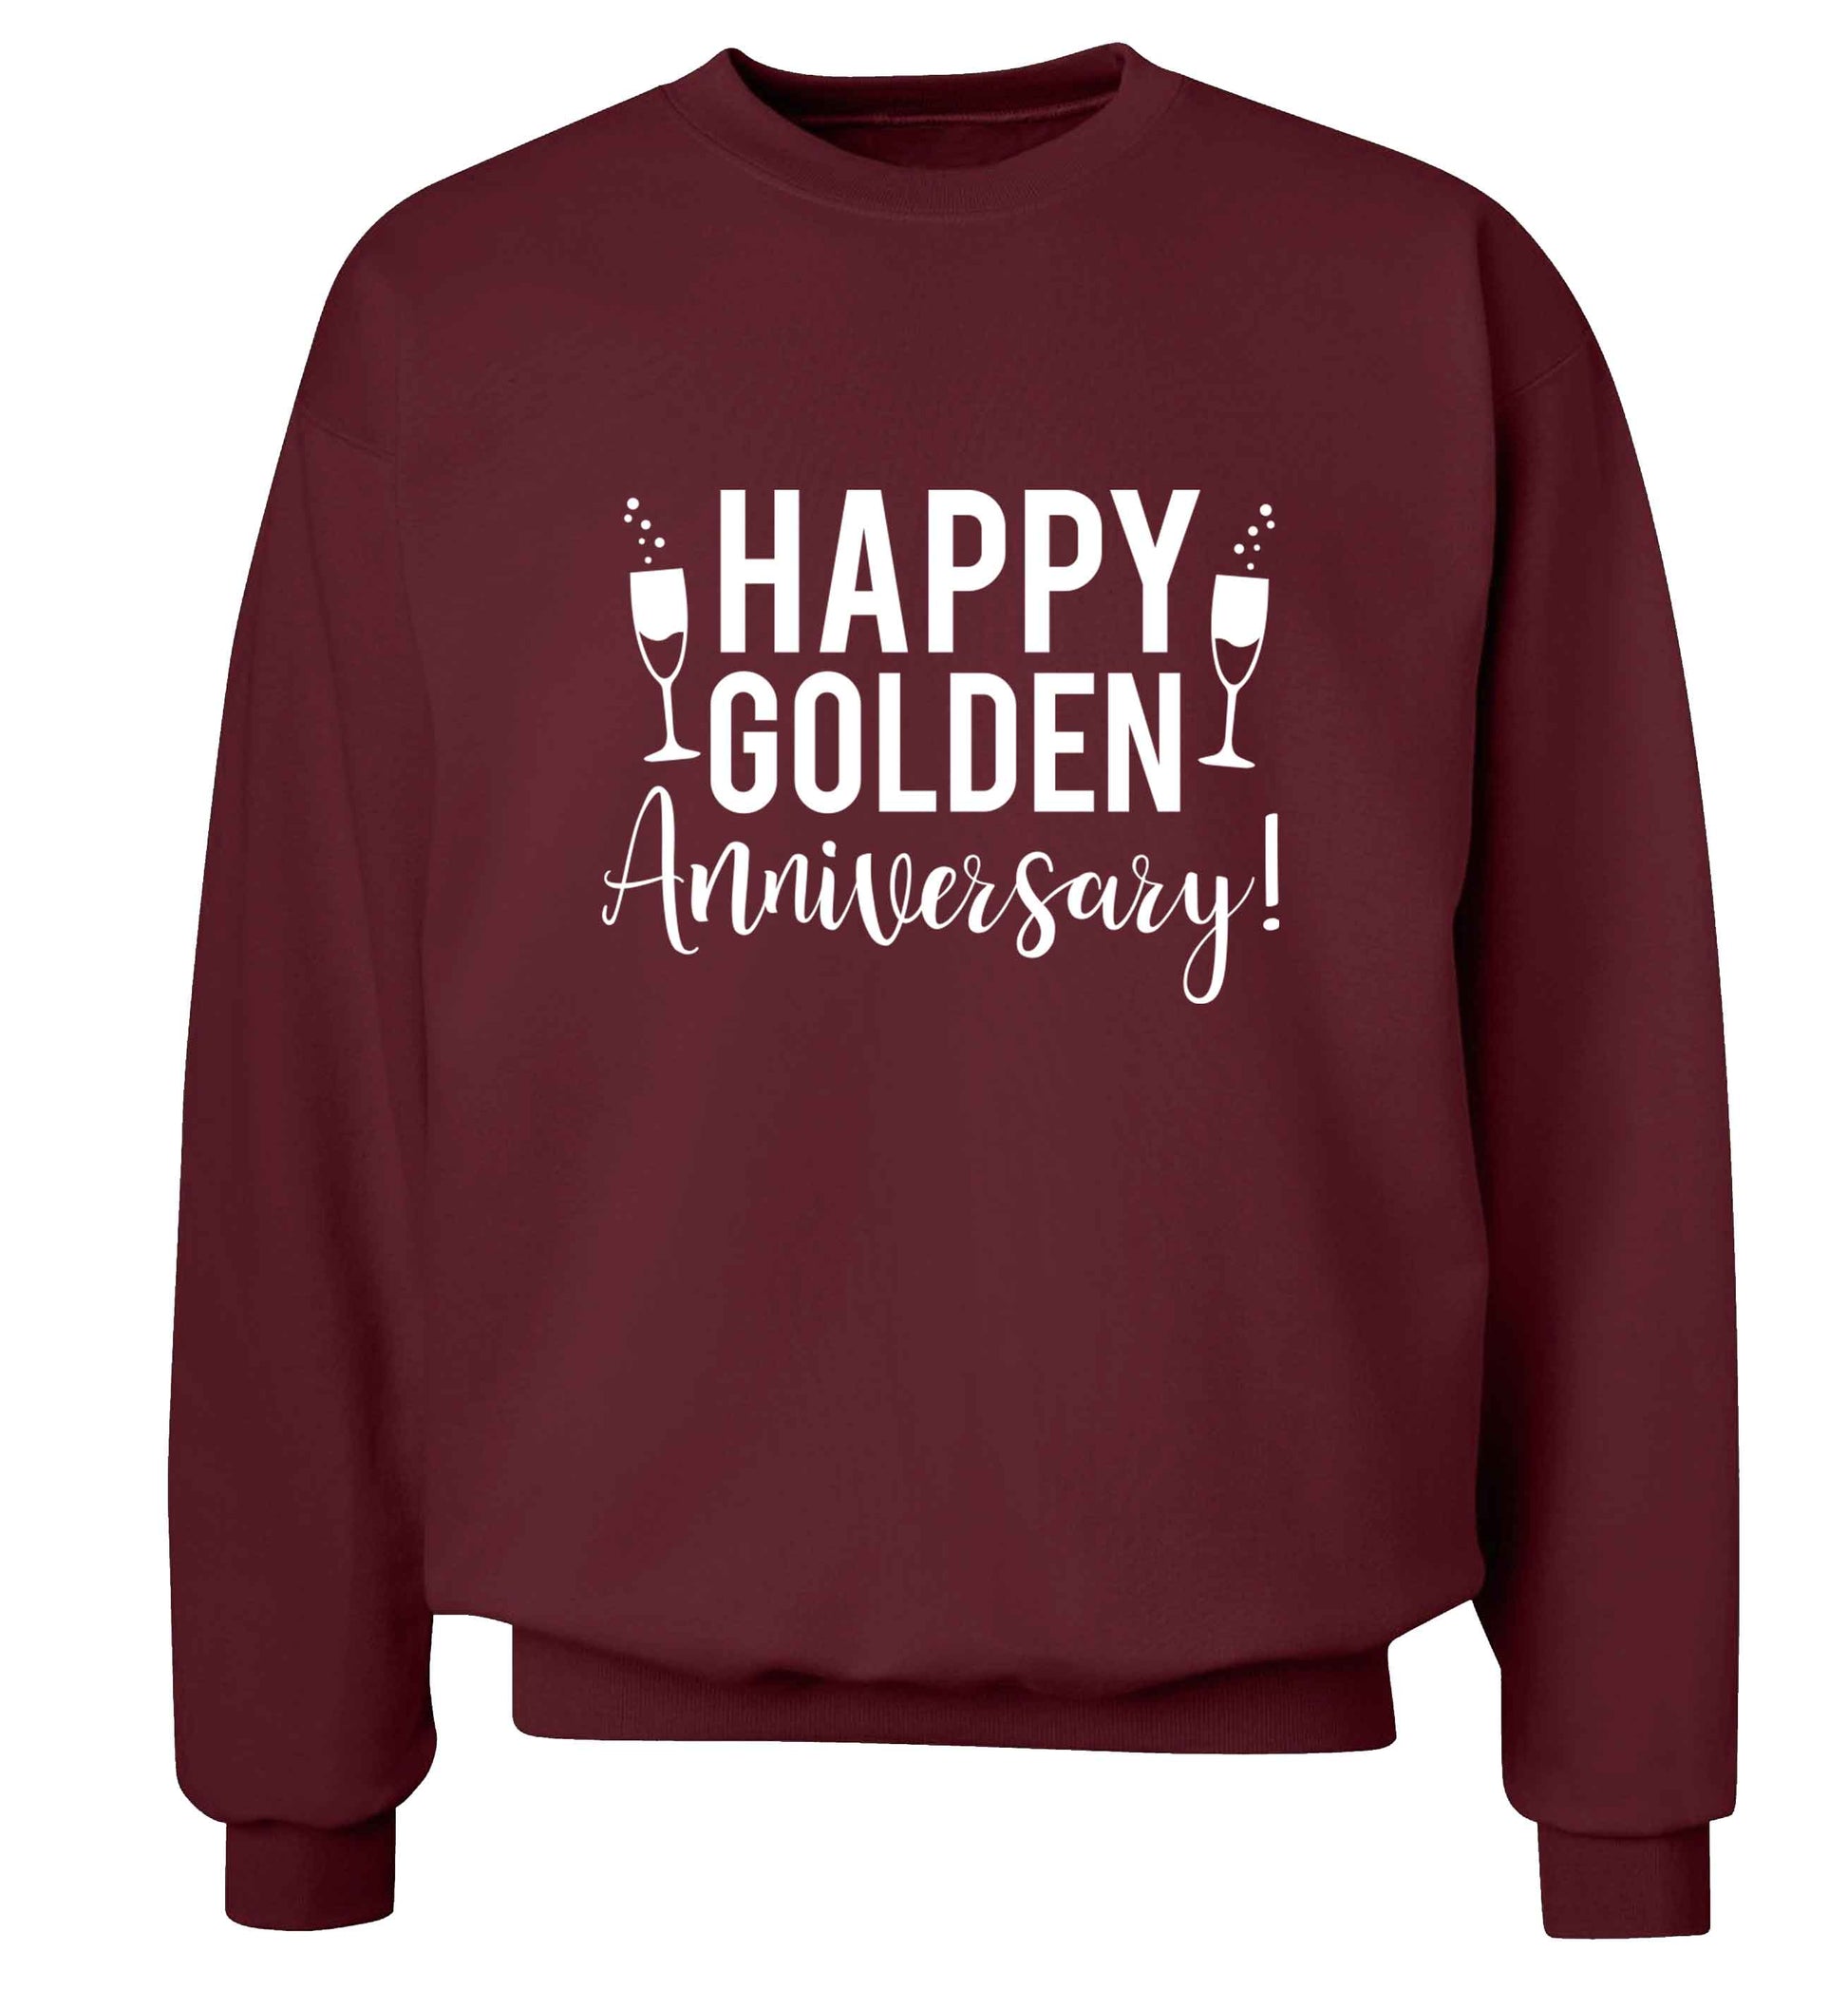 Happy golden anniversary! adult's unisex maroon sweater 2XL